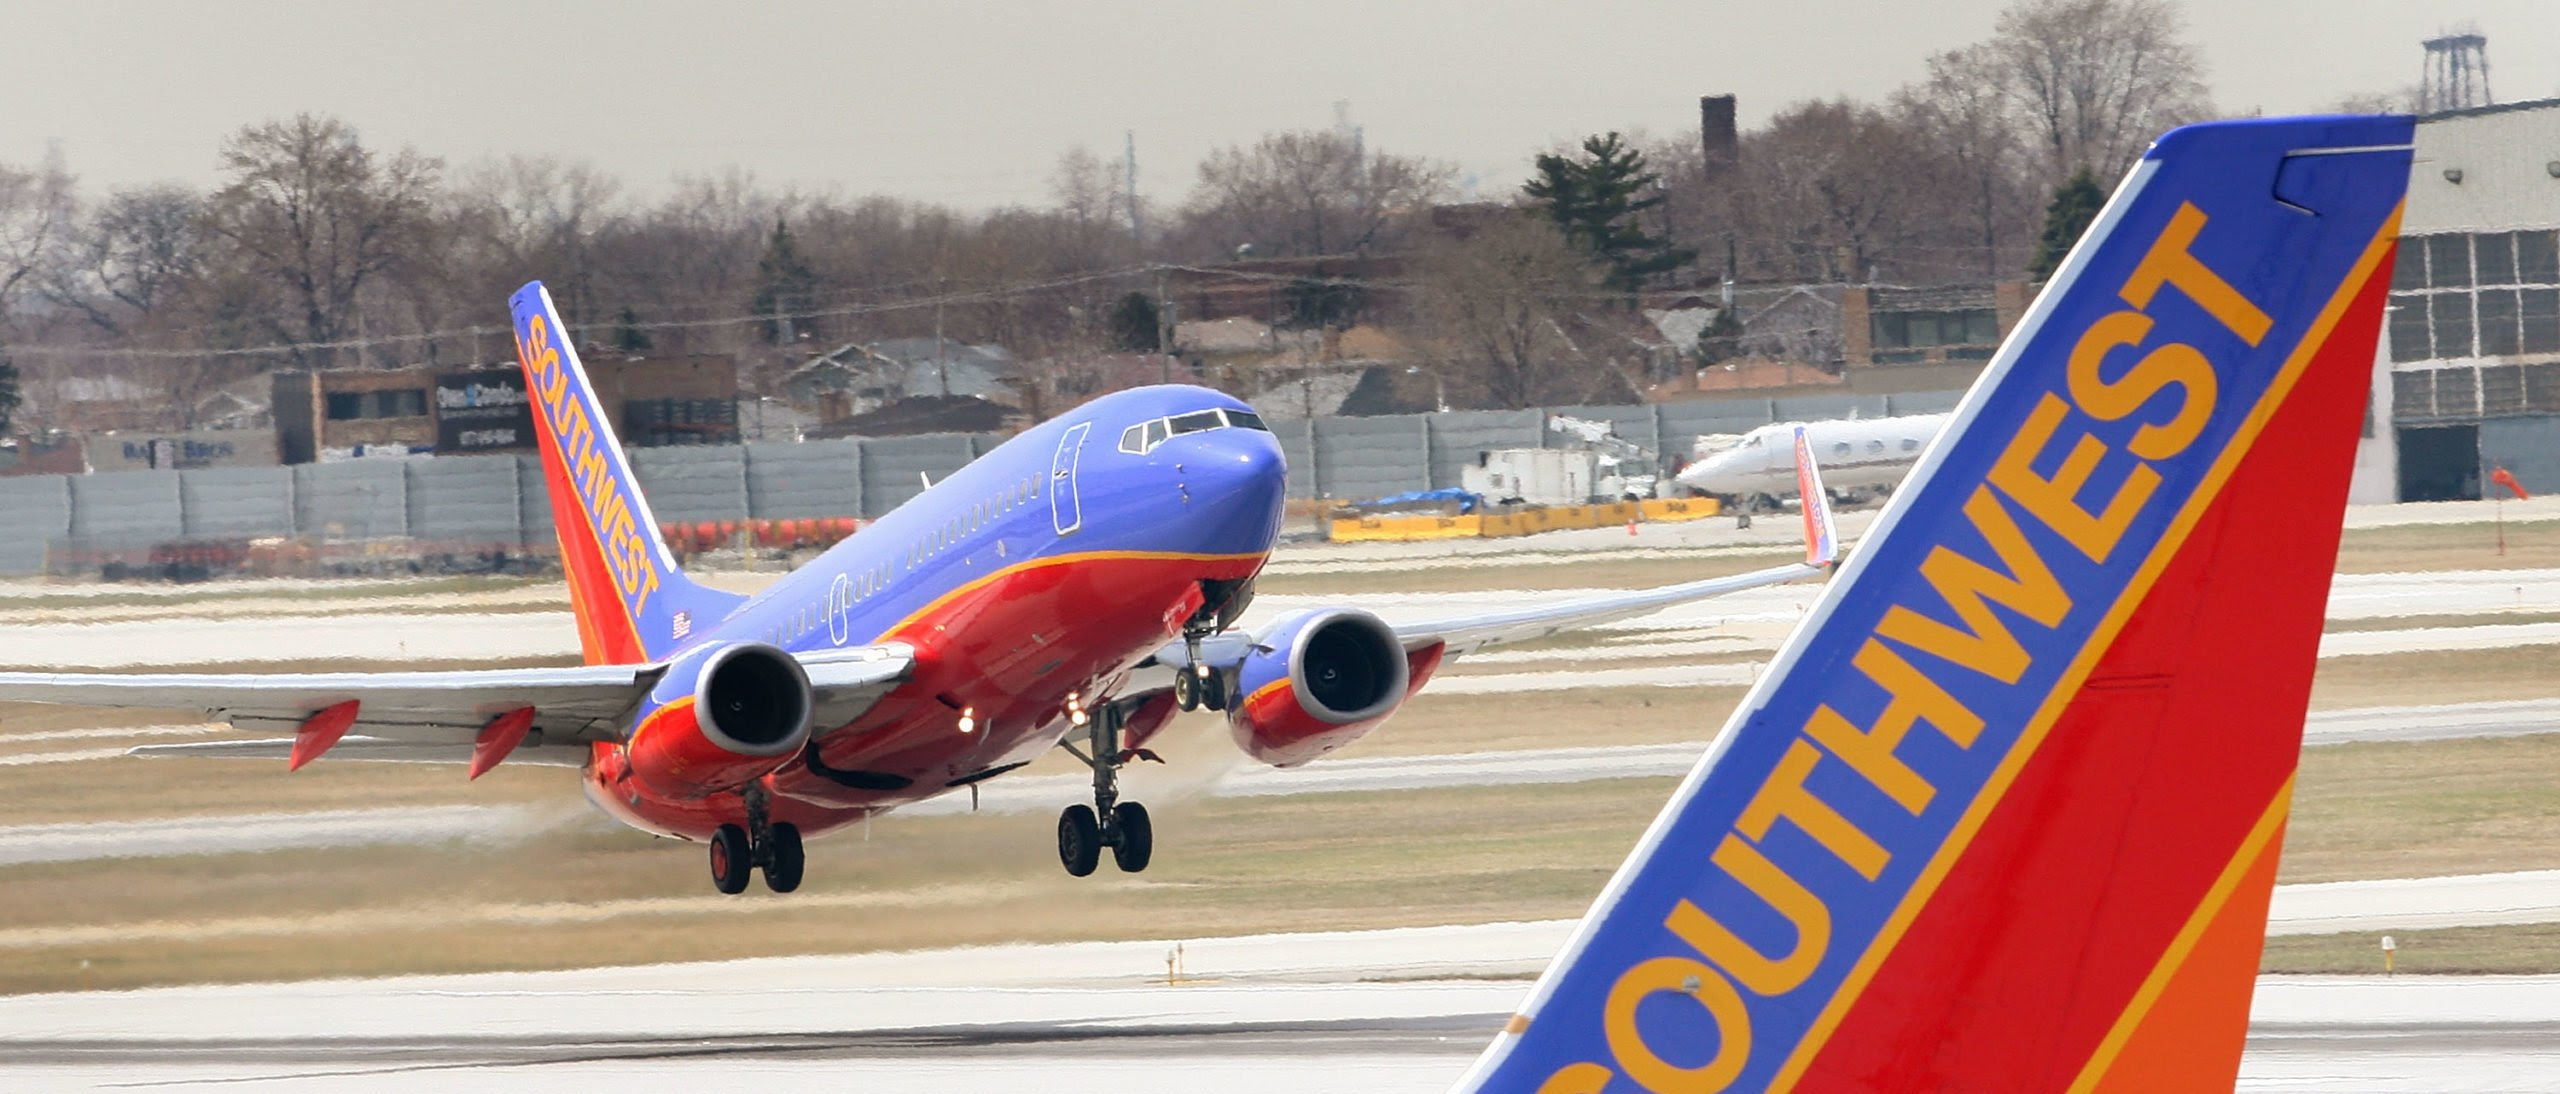 Southwest Airlines Pilot Says ‘Let’s Go, Brandon’ To Passengers Over Intercom